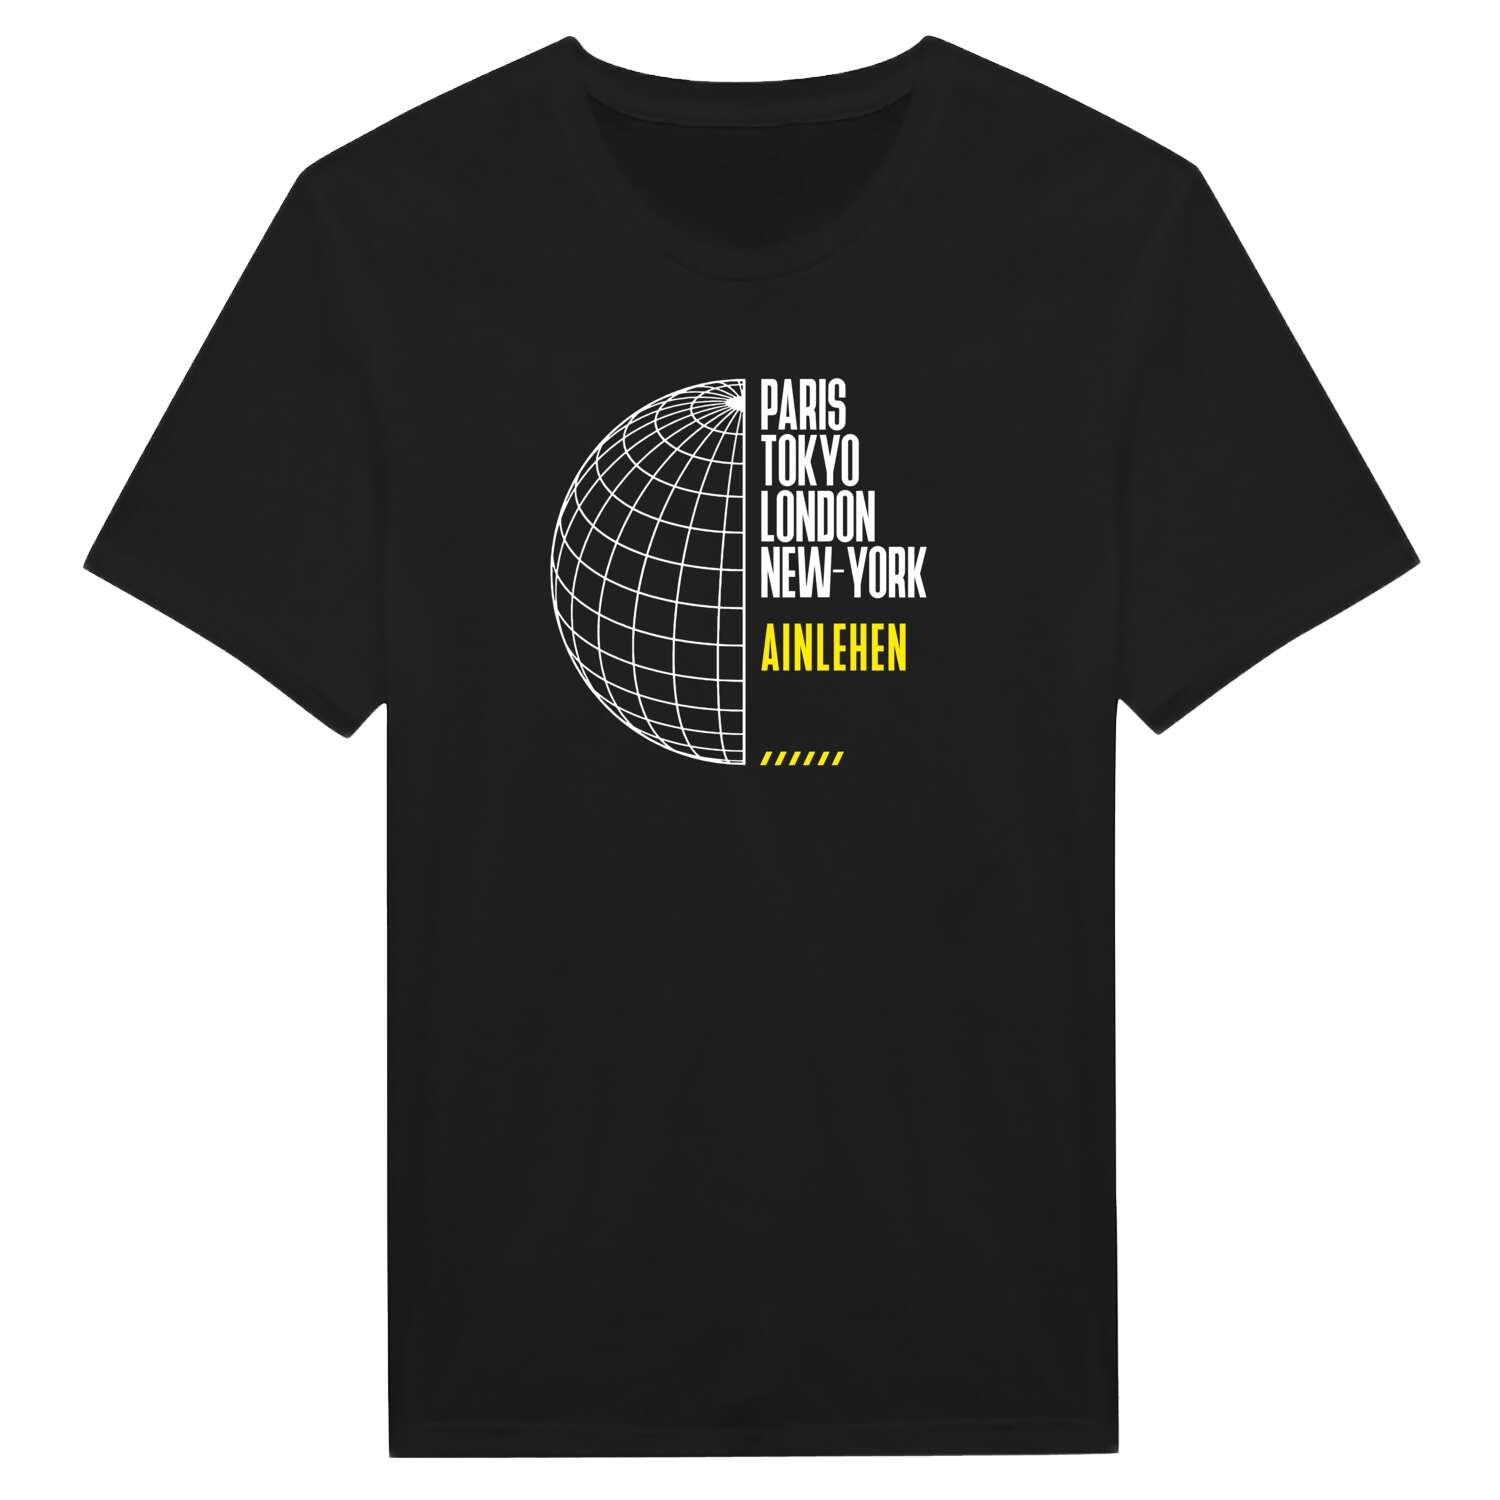 Ainlehen T-Shirt »Paris Tokyo London«